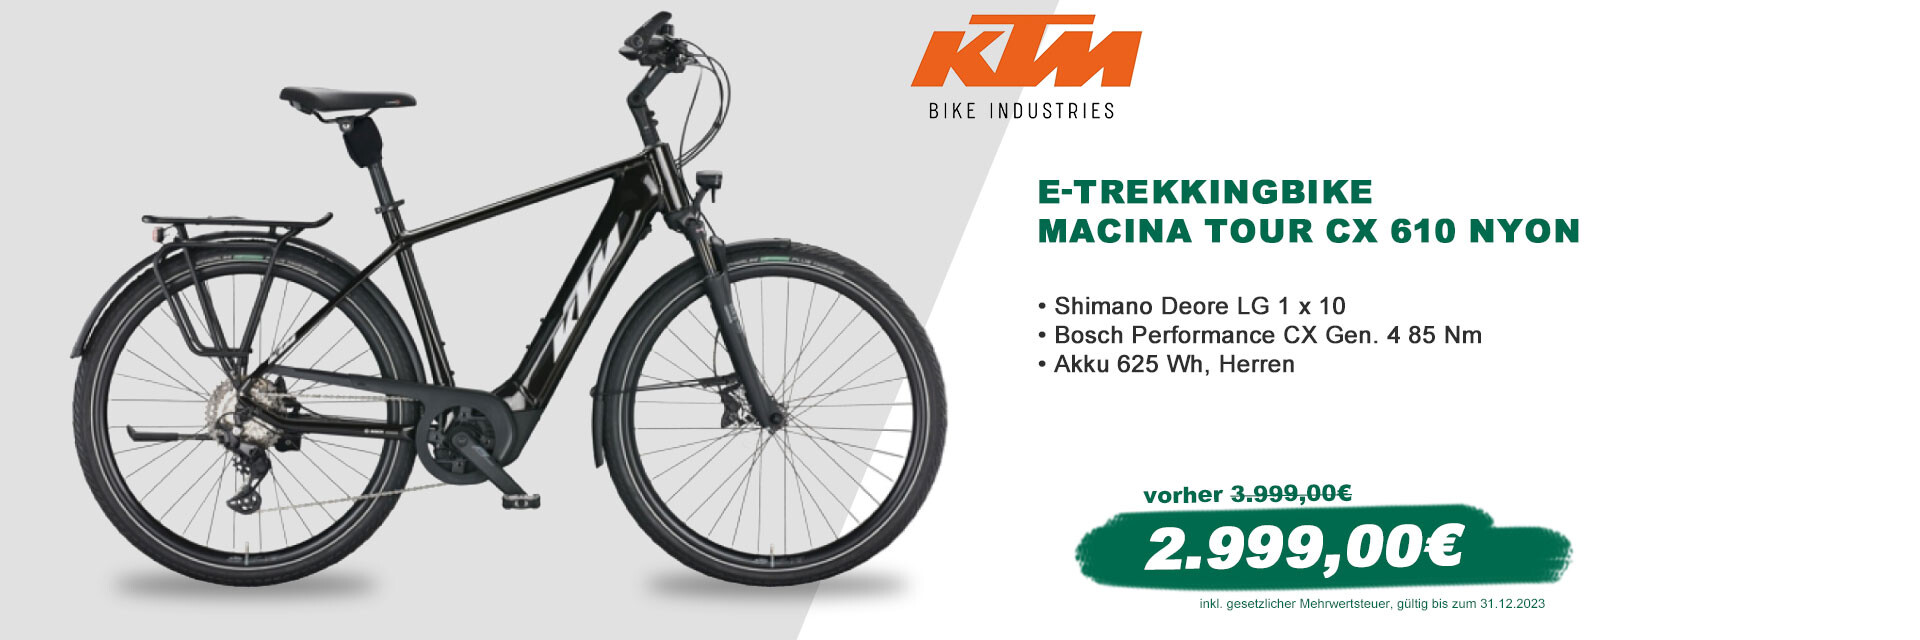 KTM Macina Tour CX 610 Nyon